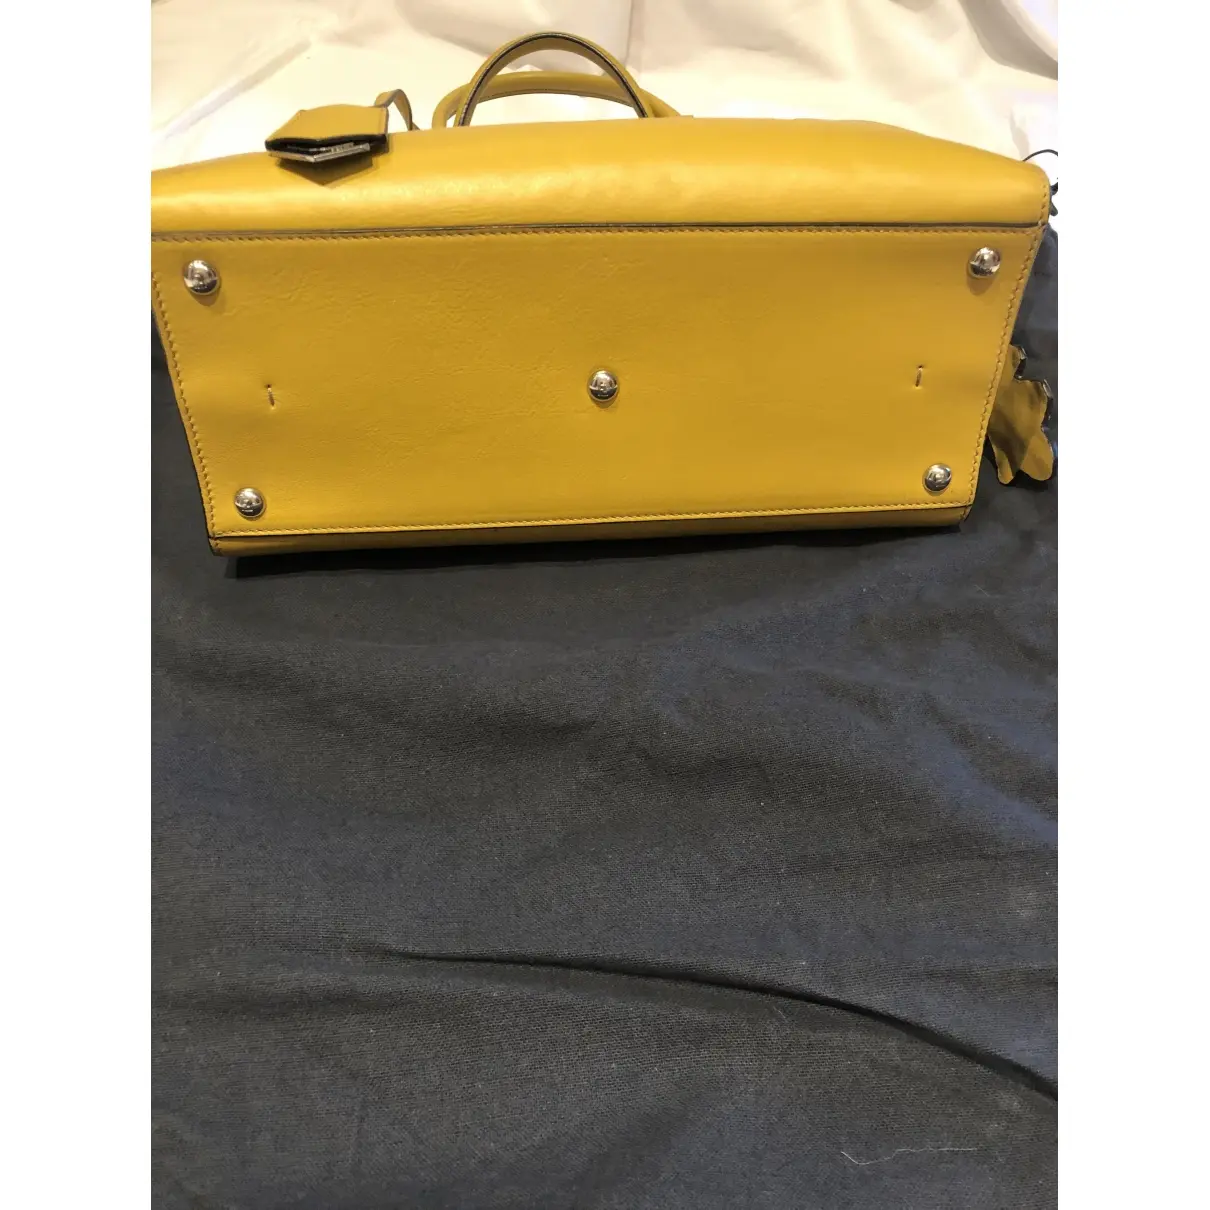 Fendi 3Jours leather handbag for sale